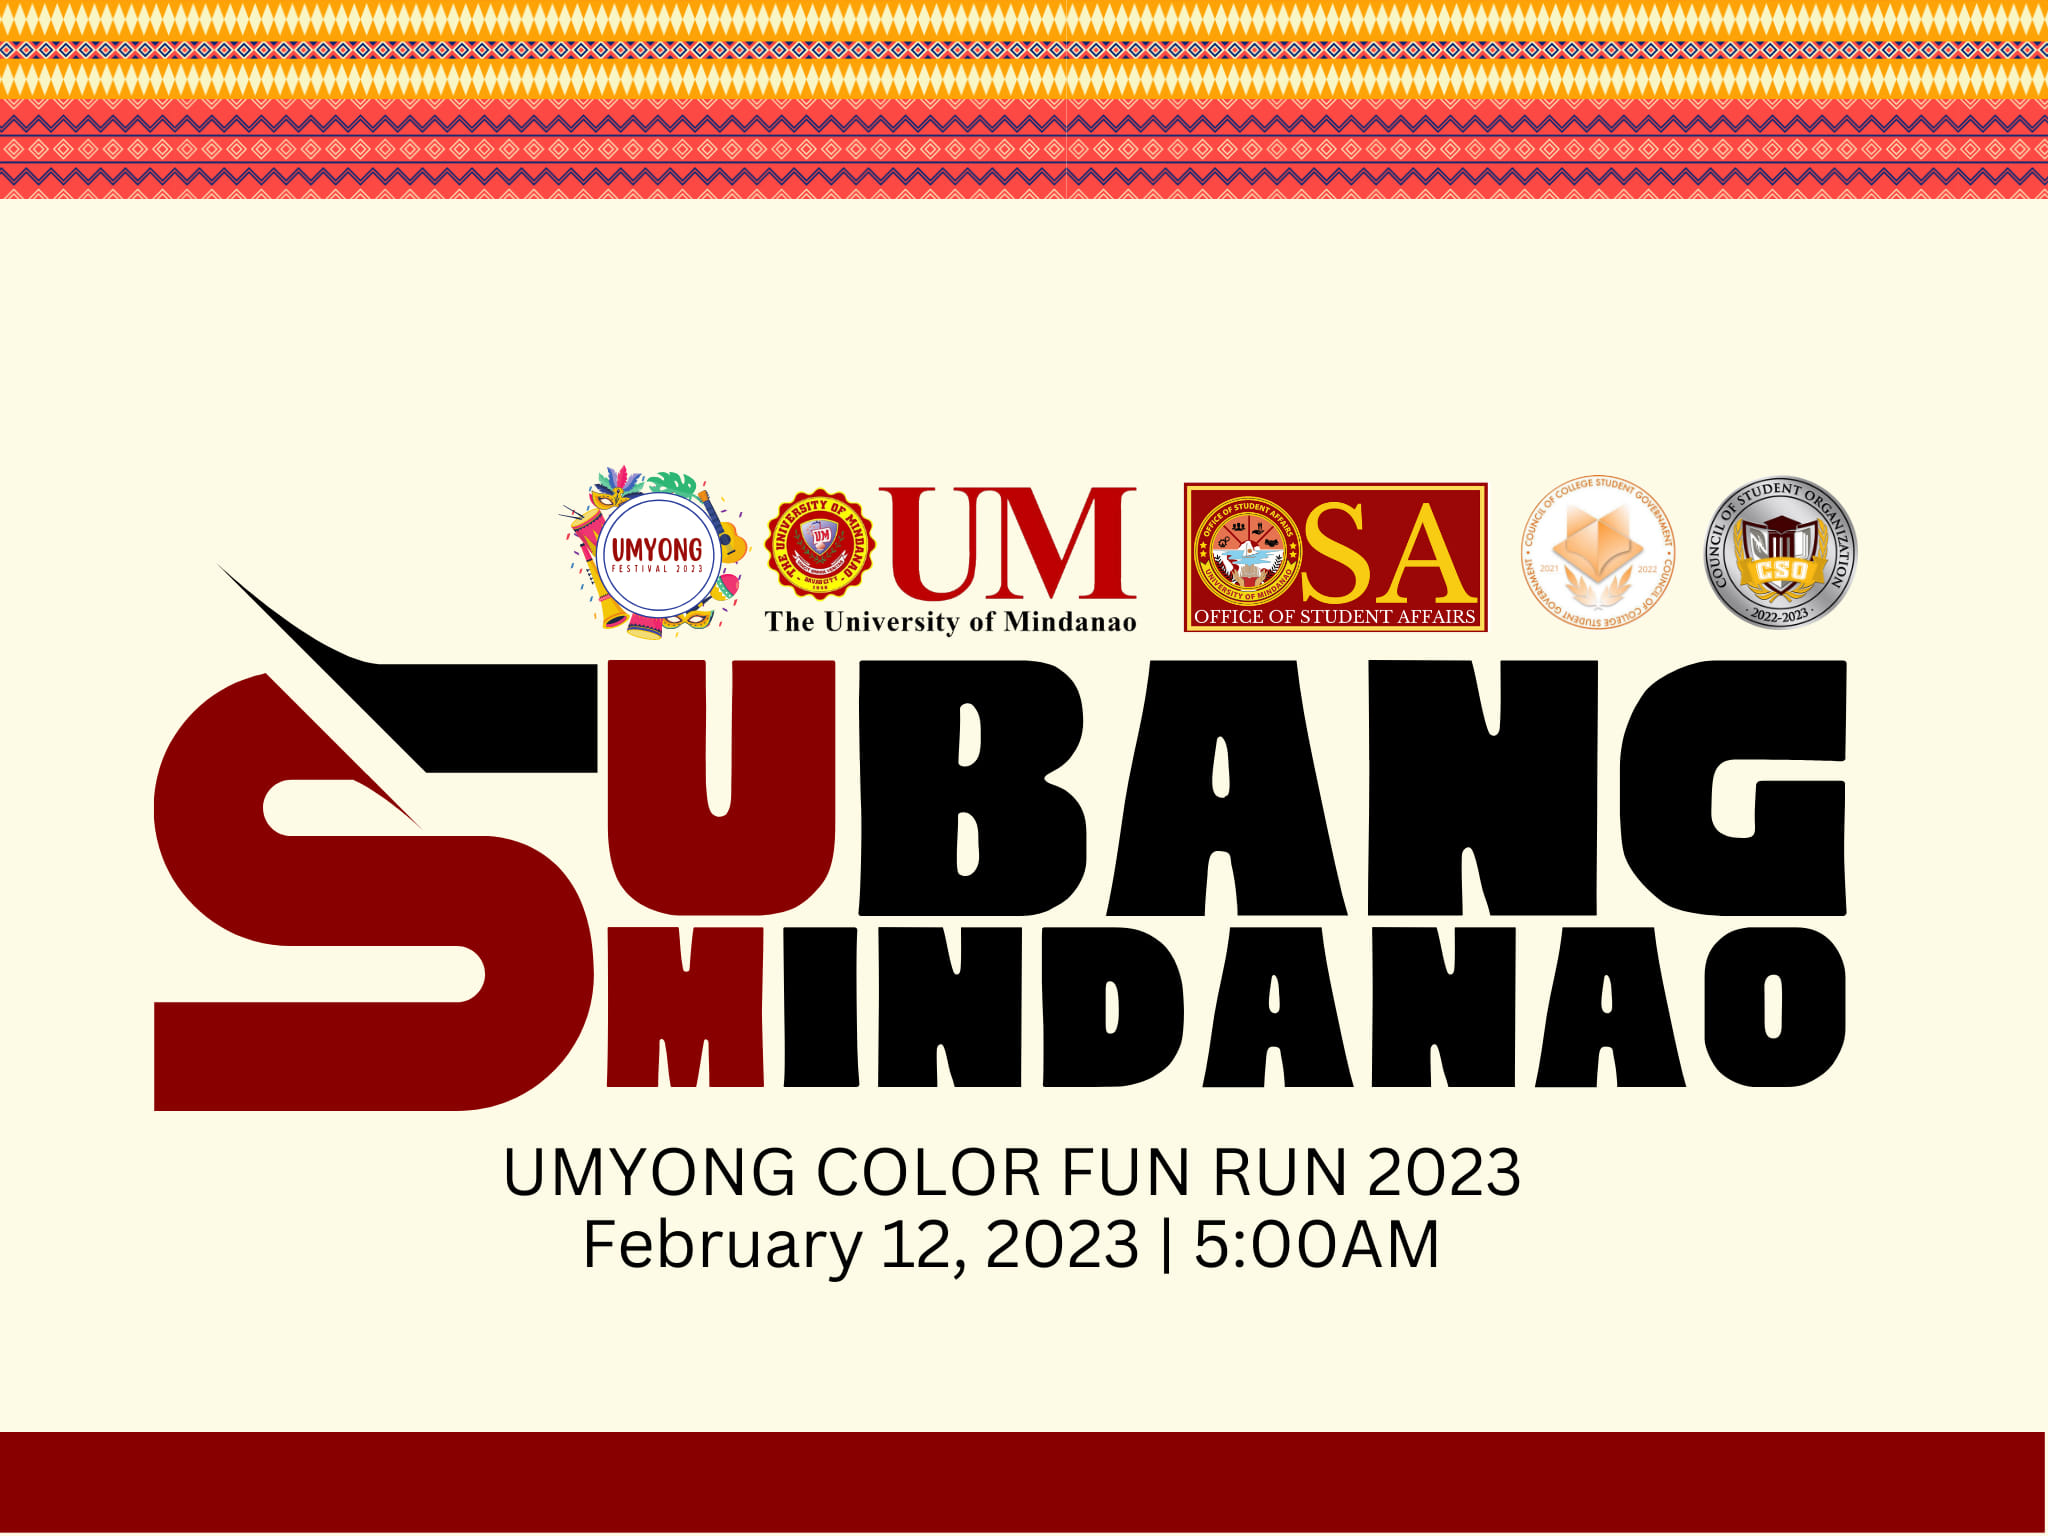 SUBANG MINDANAO Fun Run 2023: Successful run for students